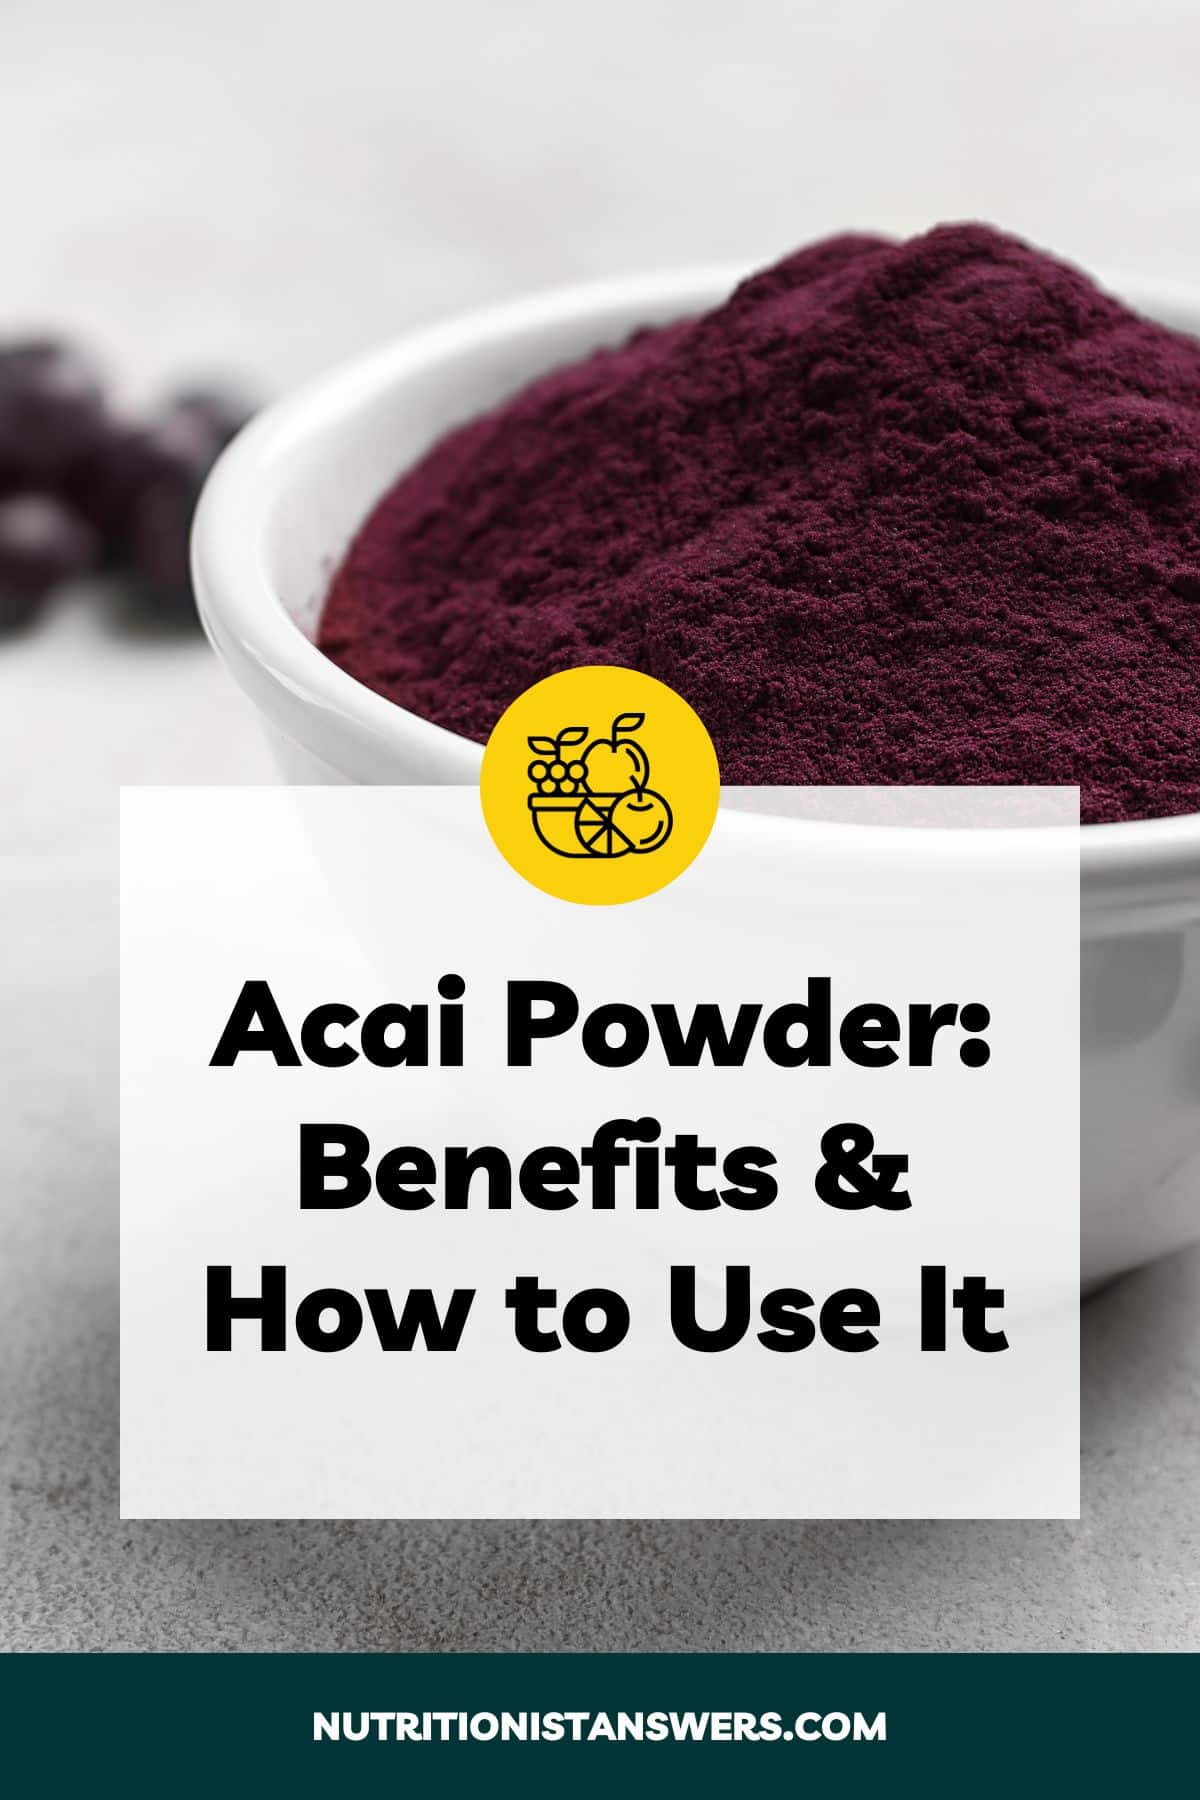 Acai Powder: Benefits & How to Use It